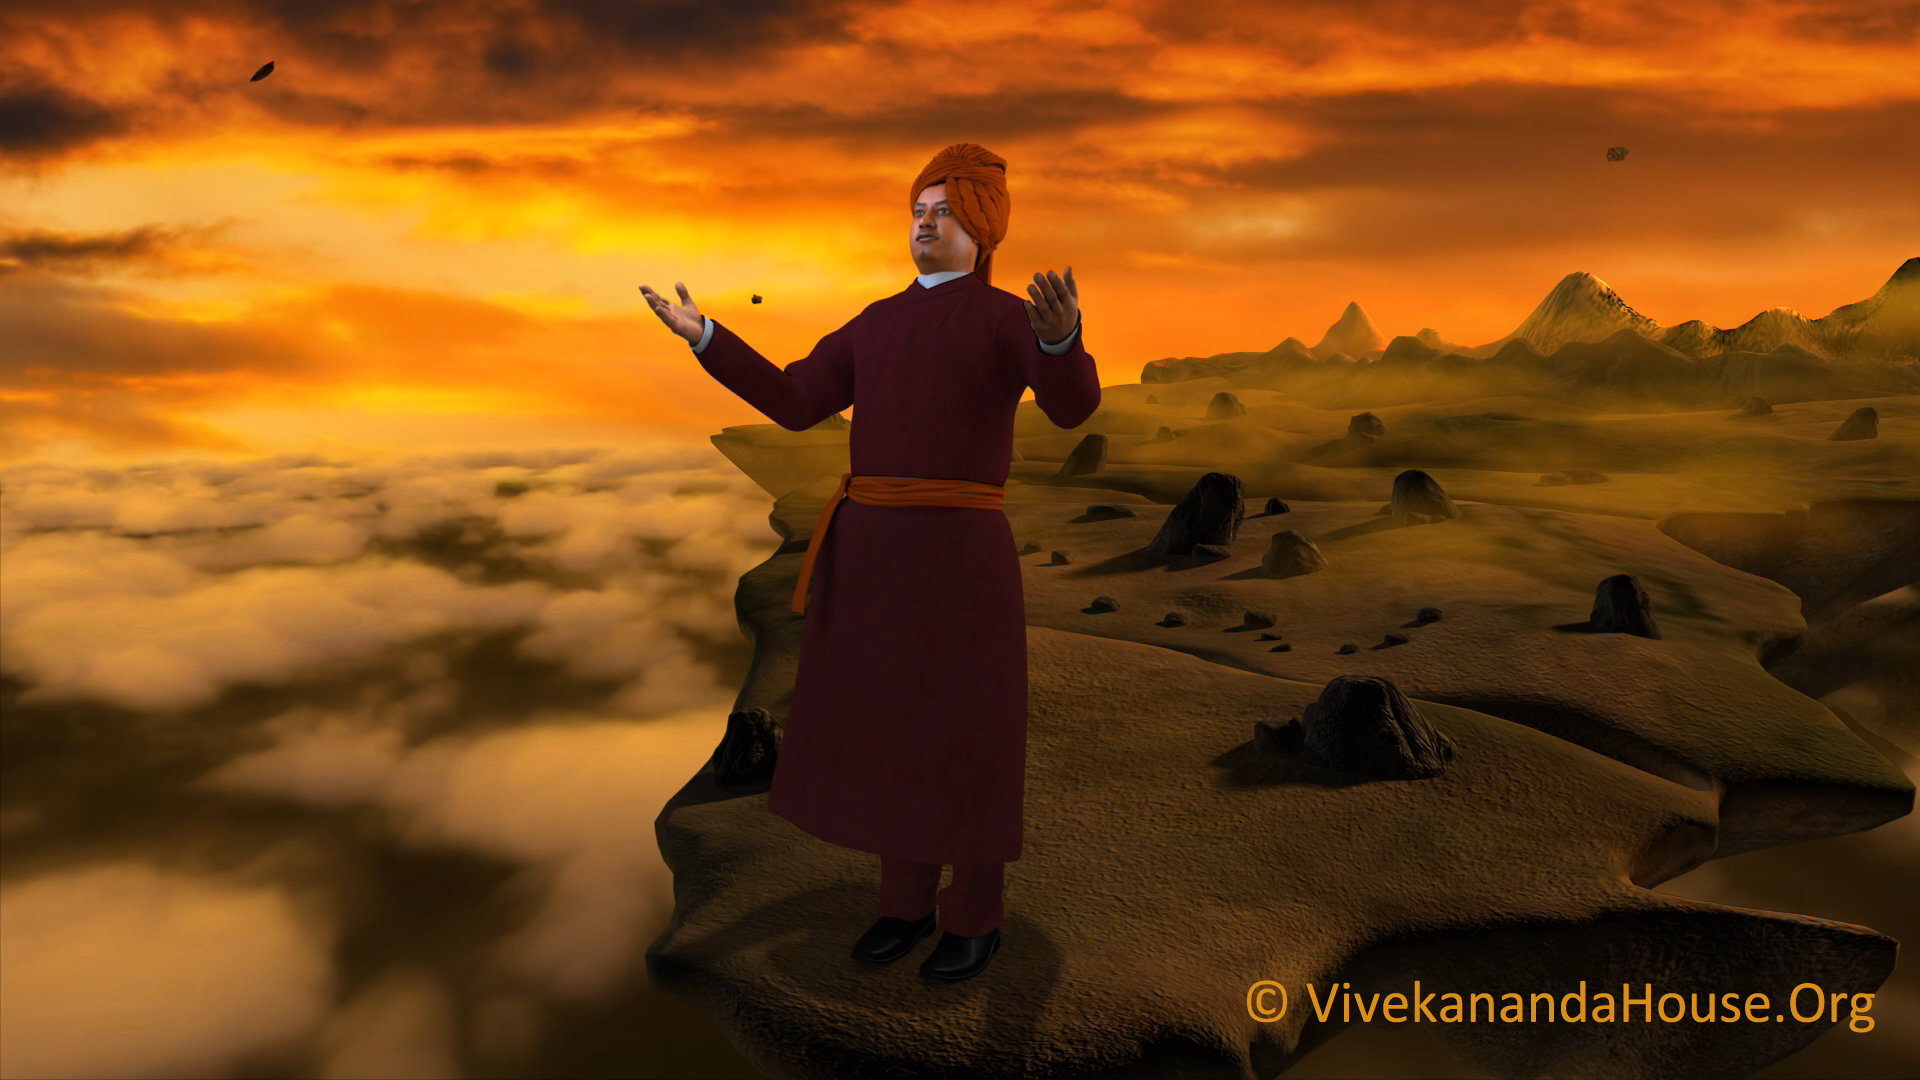 To A HD Version Of Vivekananda 3d Movie Wallpaper Click On